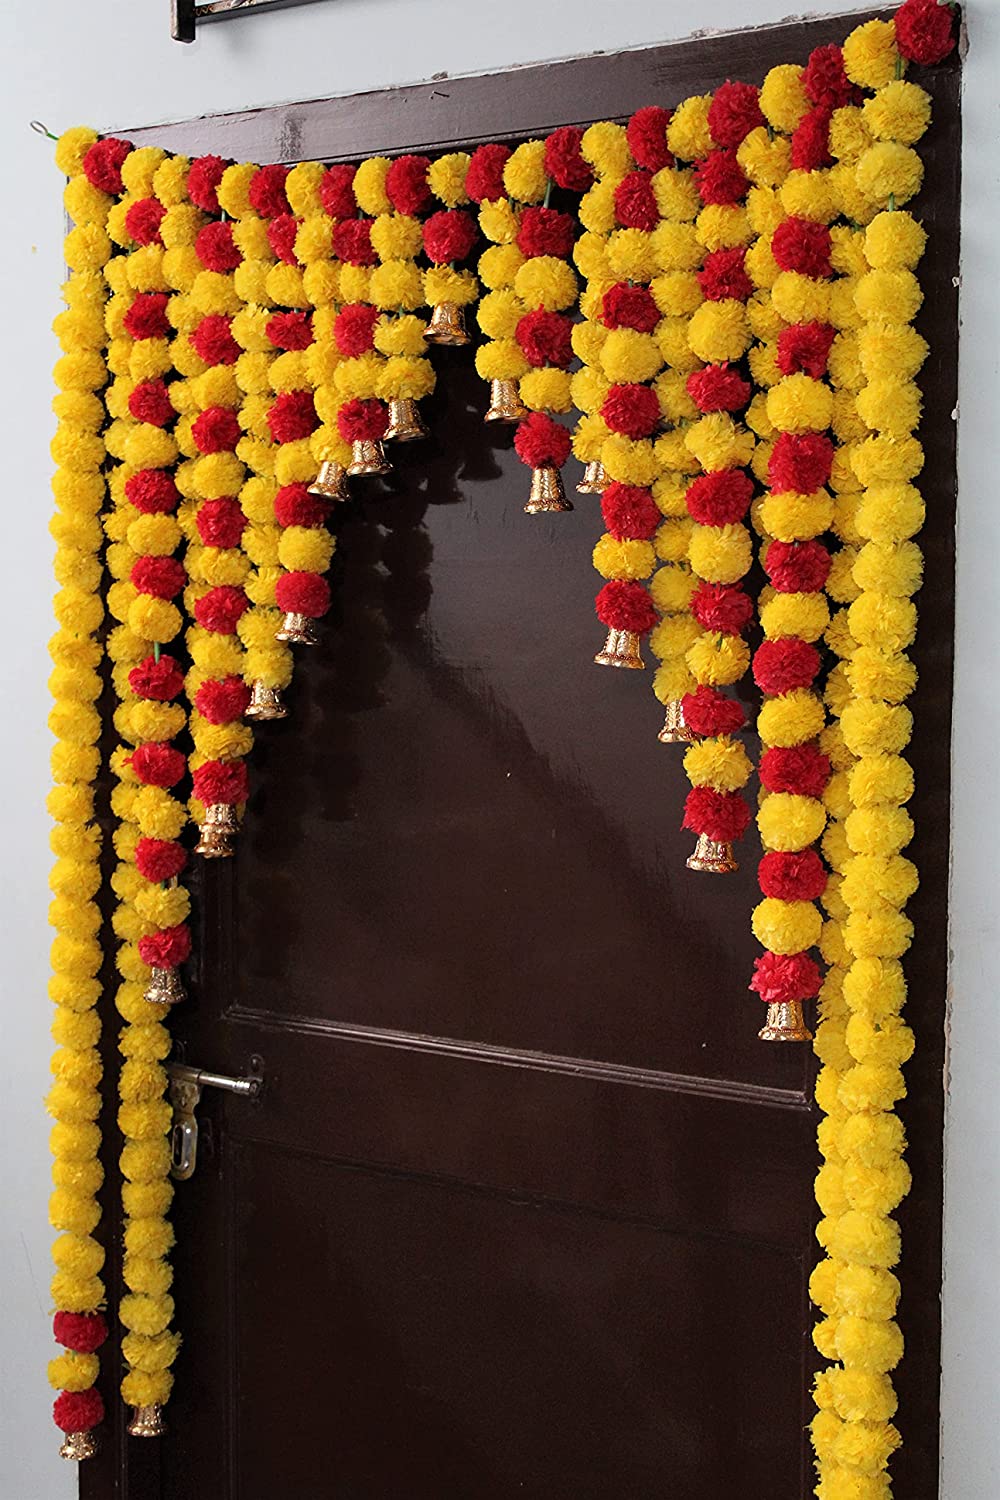 LAMANSH ® marigold hangings Yellow & Red LAMANSH® Red Gold Marigold bandhanwar Toran with bell🔔 / Artificial Marigold Yollew Flowers Garlands Hanging Door Toran Latkans for All Festivals and Special Events ,Home, Office,Garden Diwali Decorations